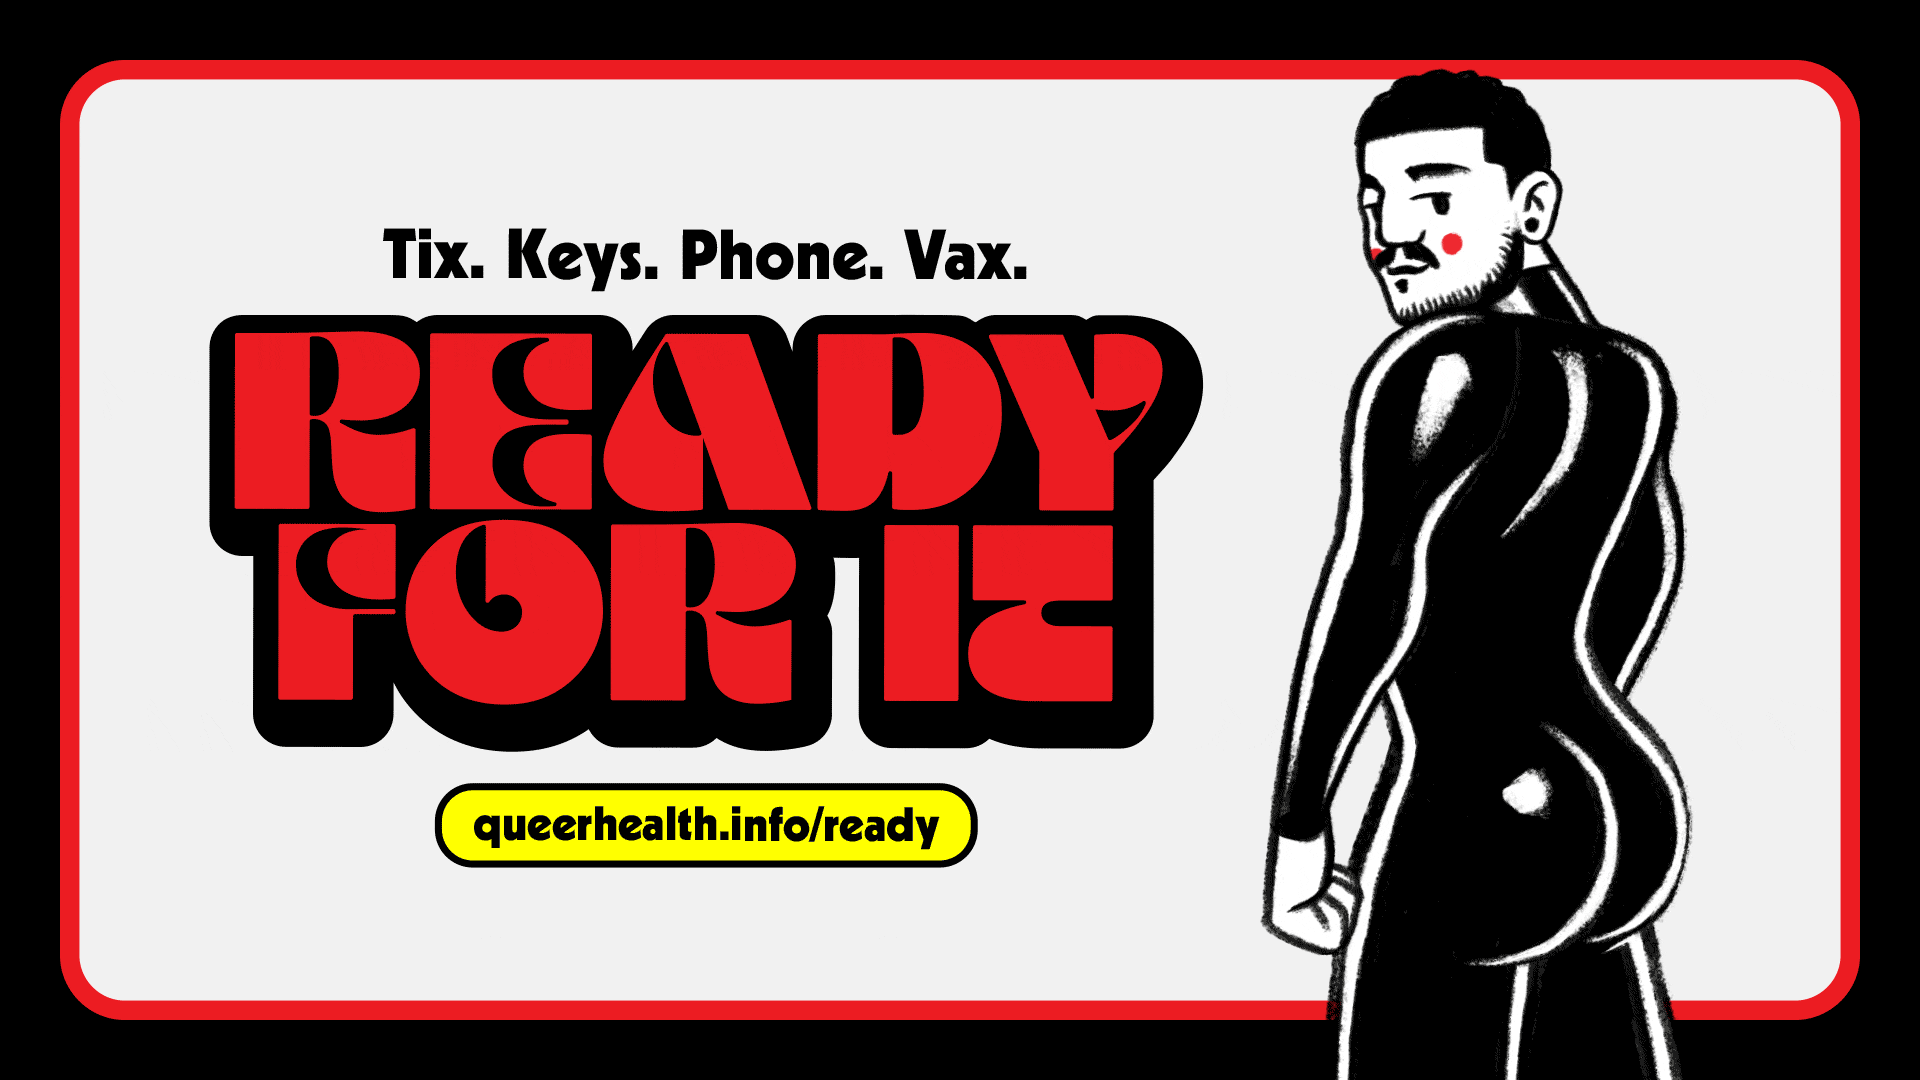 “READY FOR IT: Tix. Keys. Phone. Vax.” animation series 7